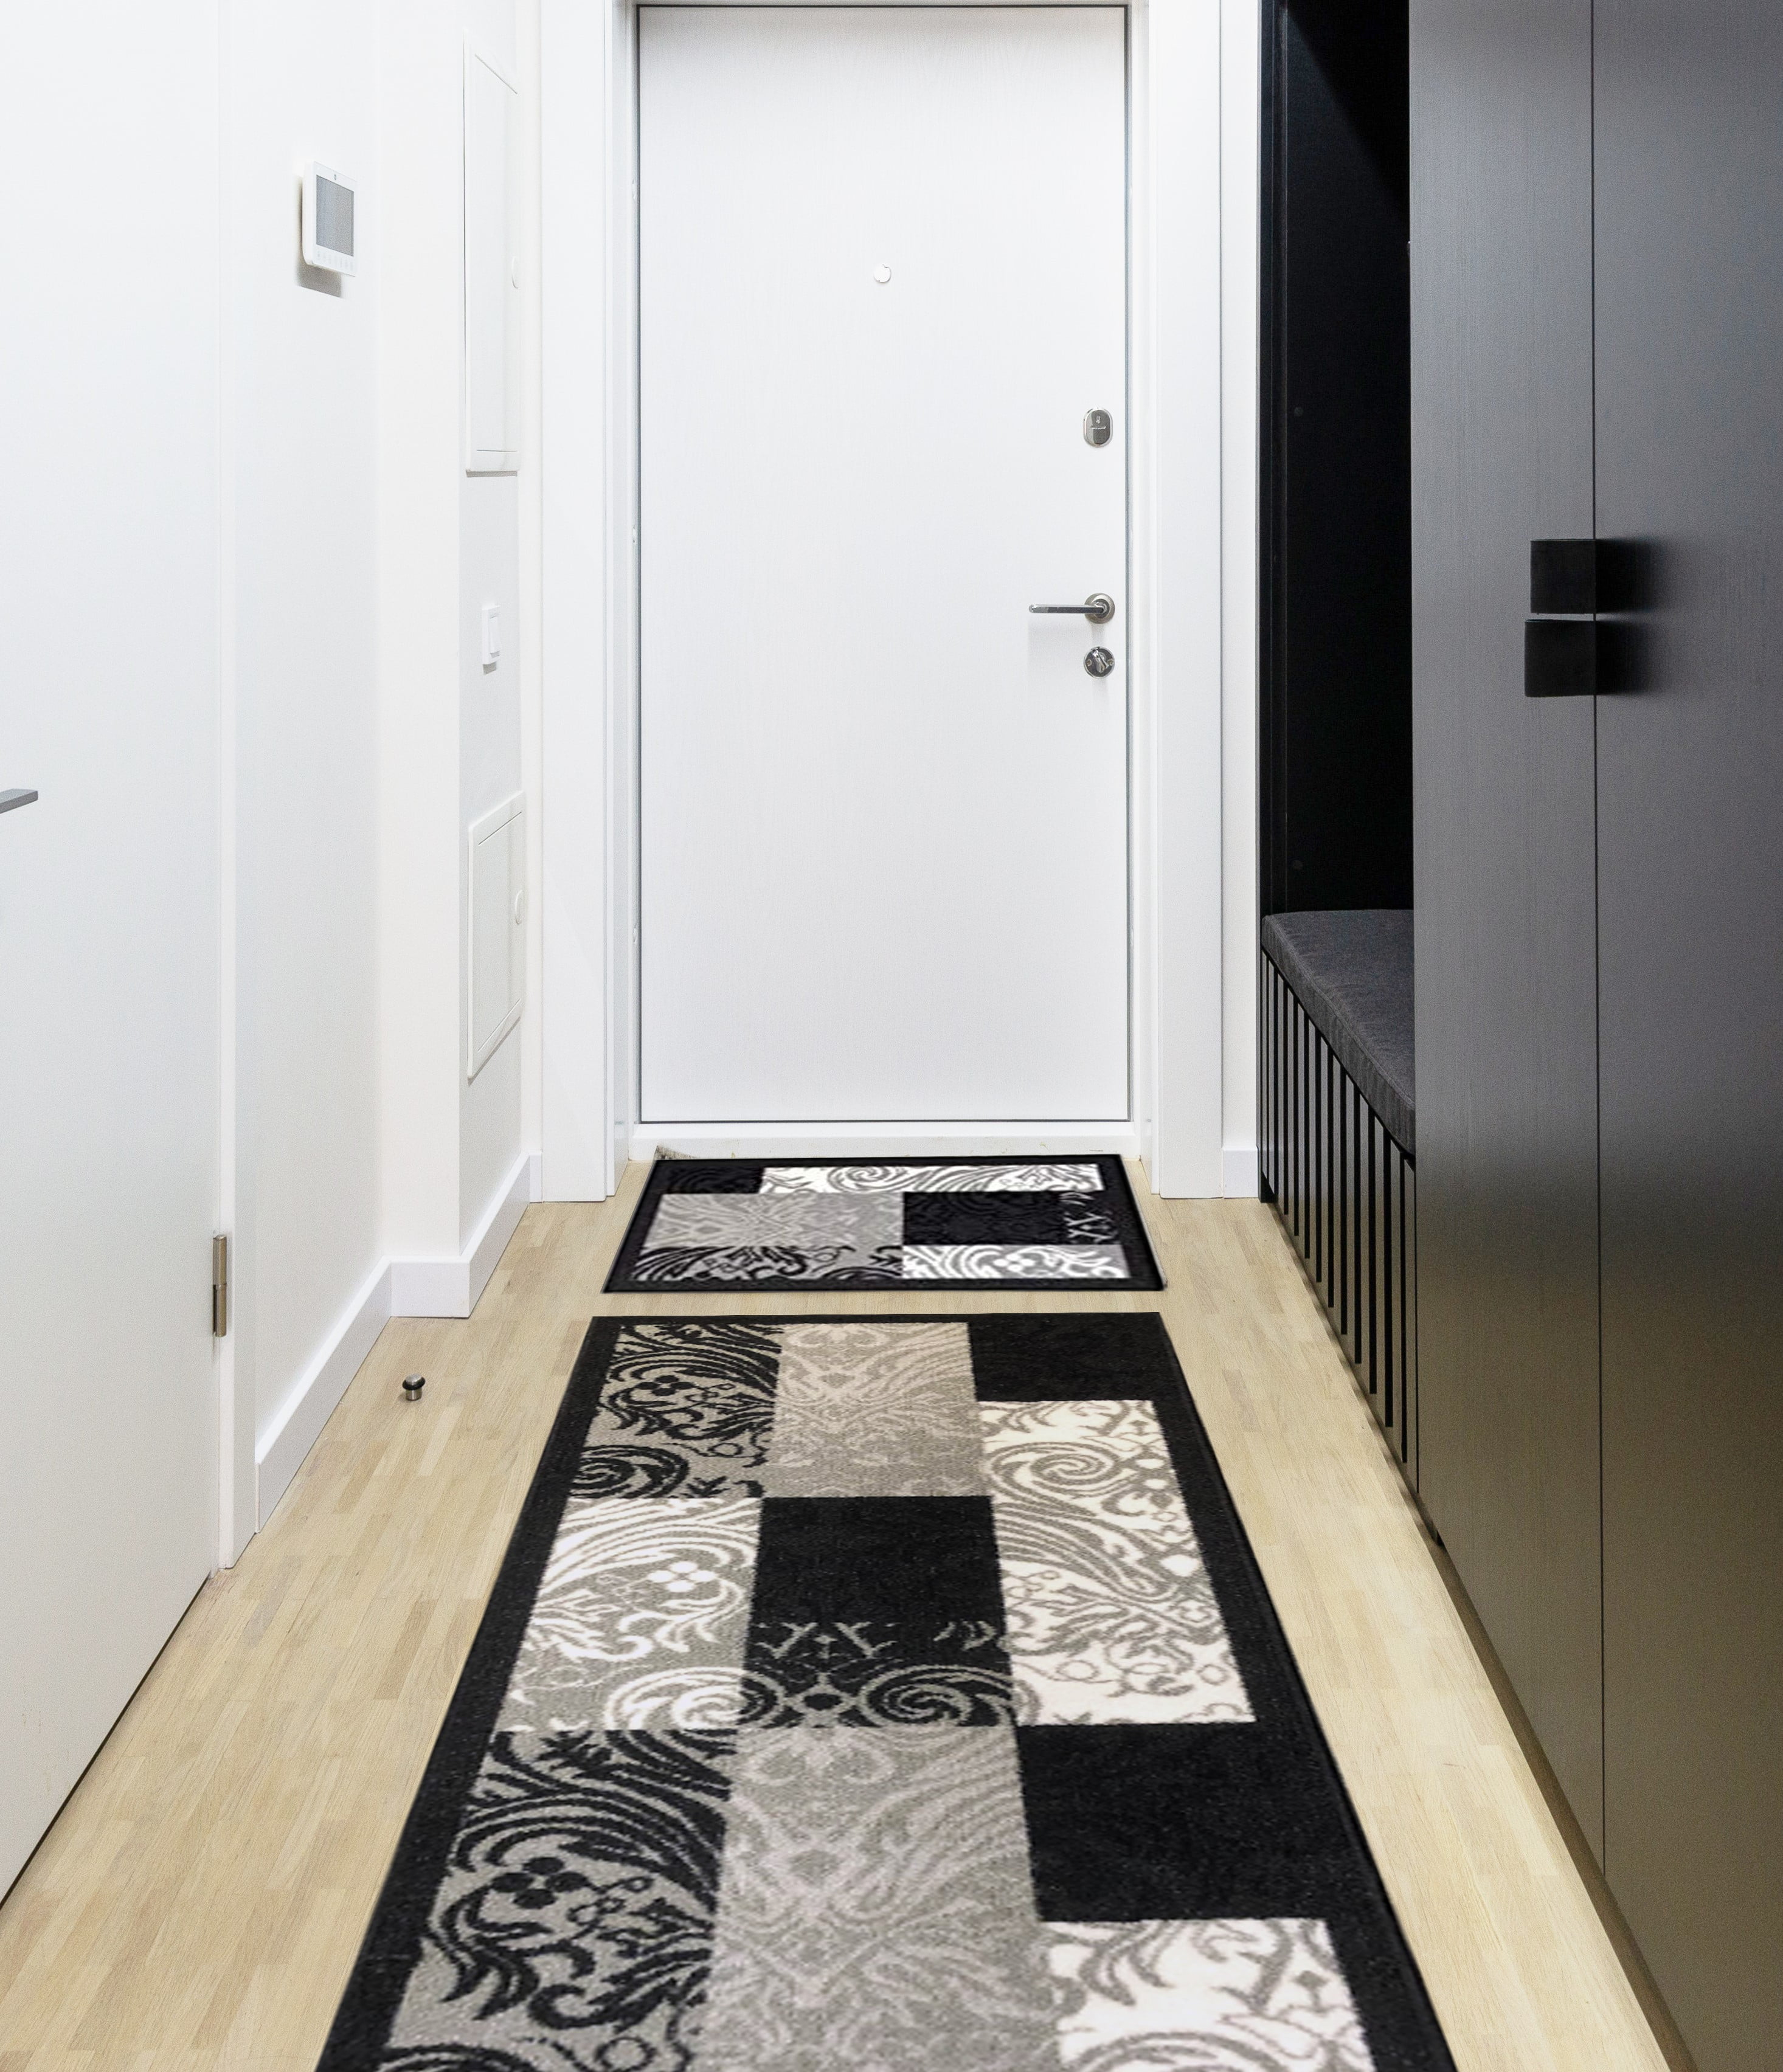 2pcs Nonslip Kitchen Mat Rubber Backing Doormat Rugs Home Floor Decor Washable 